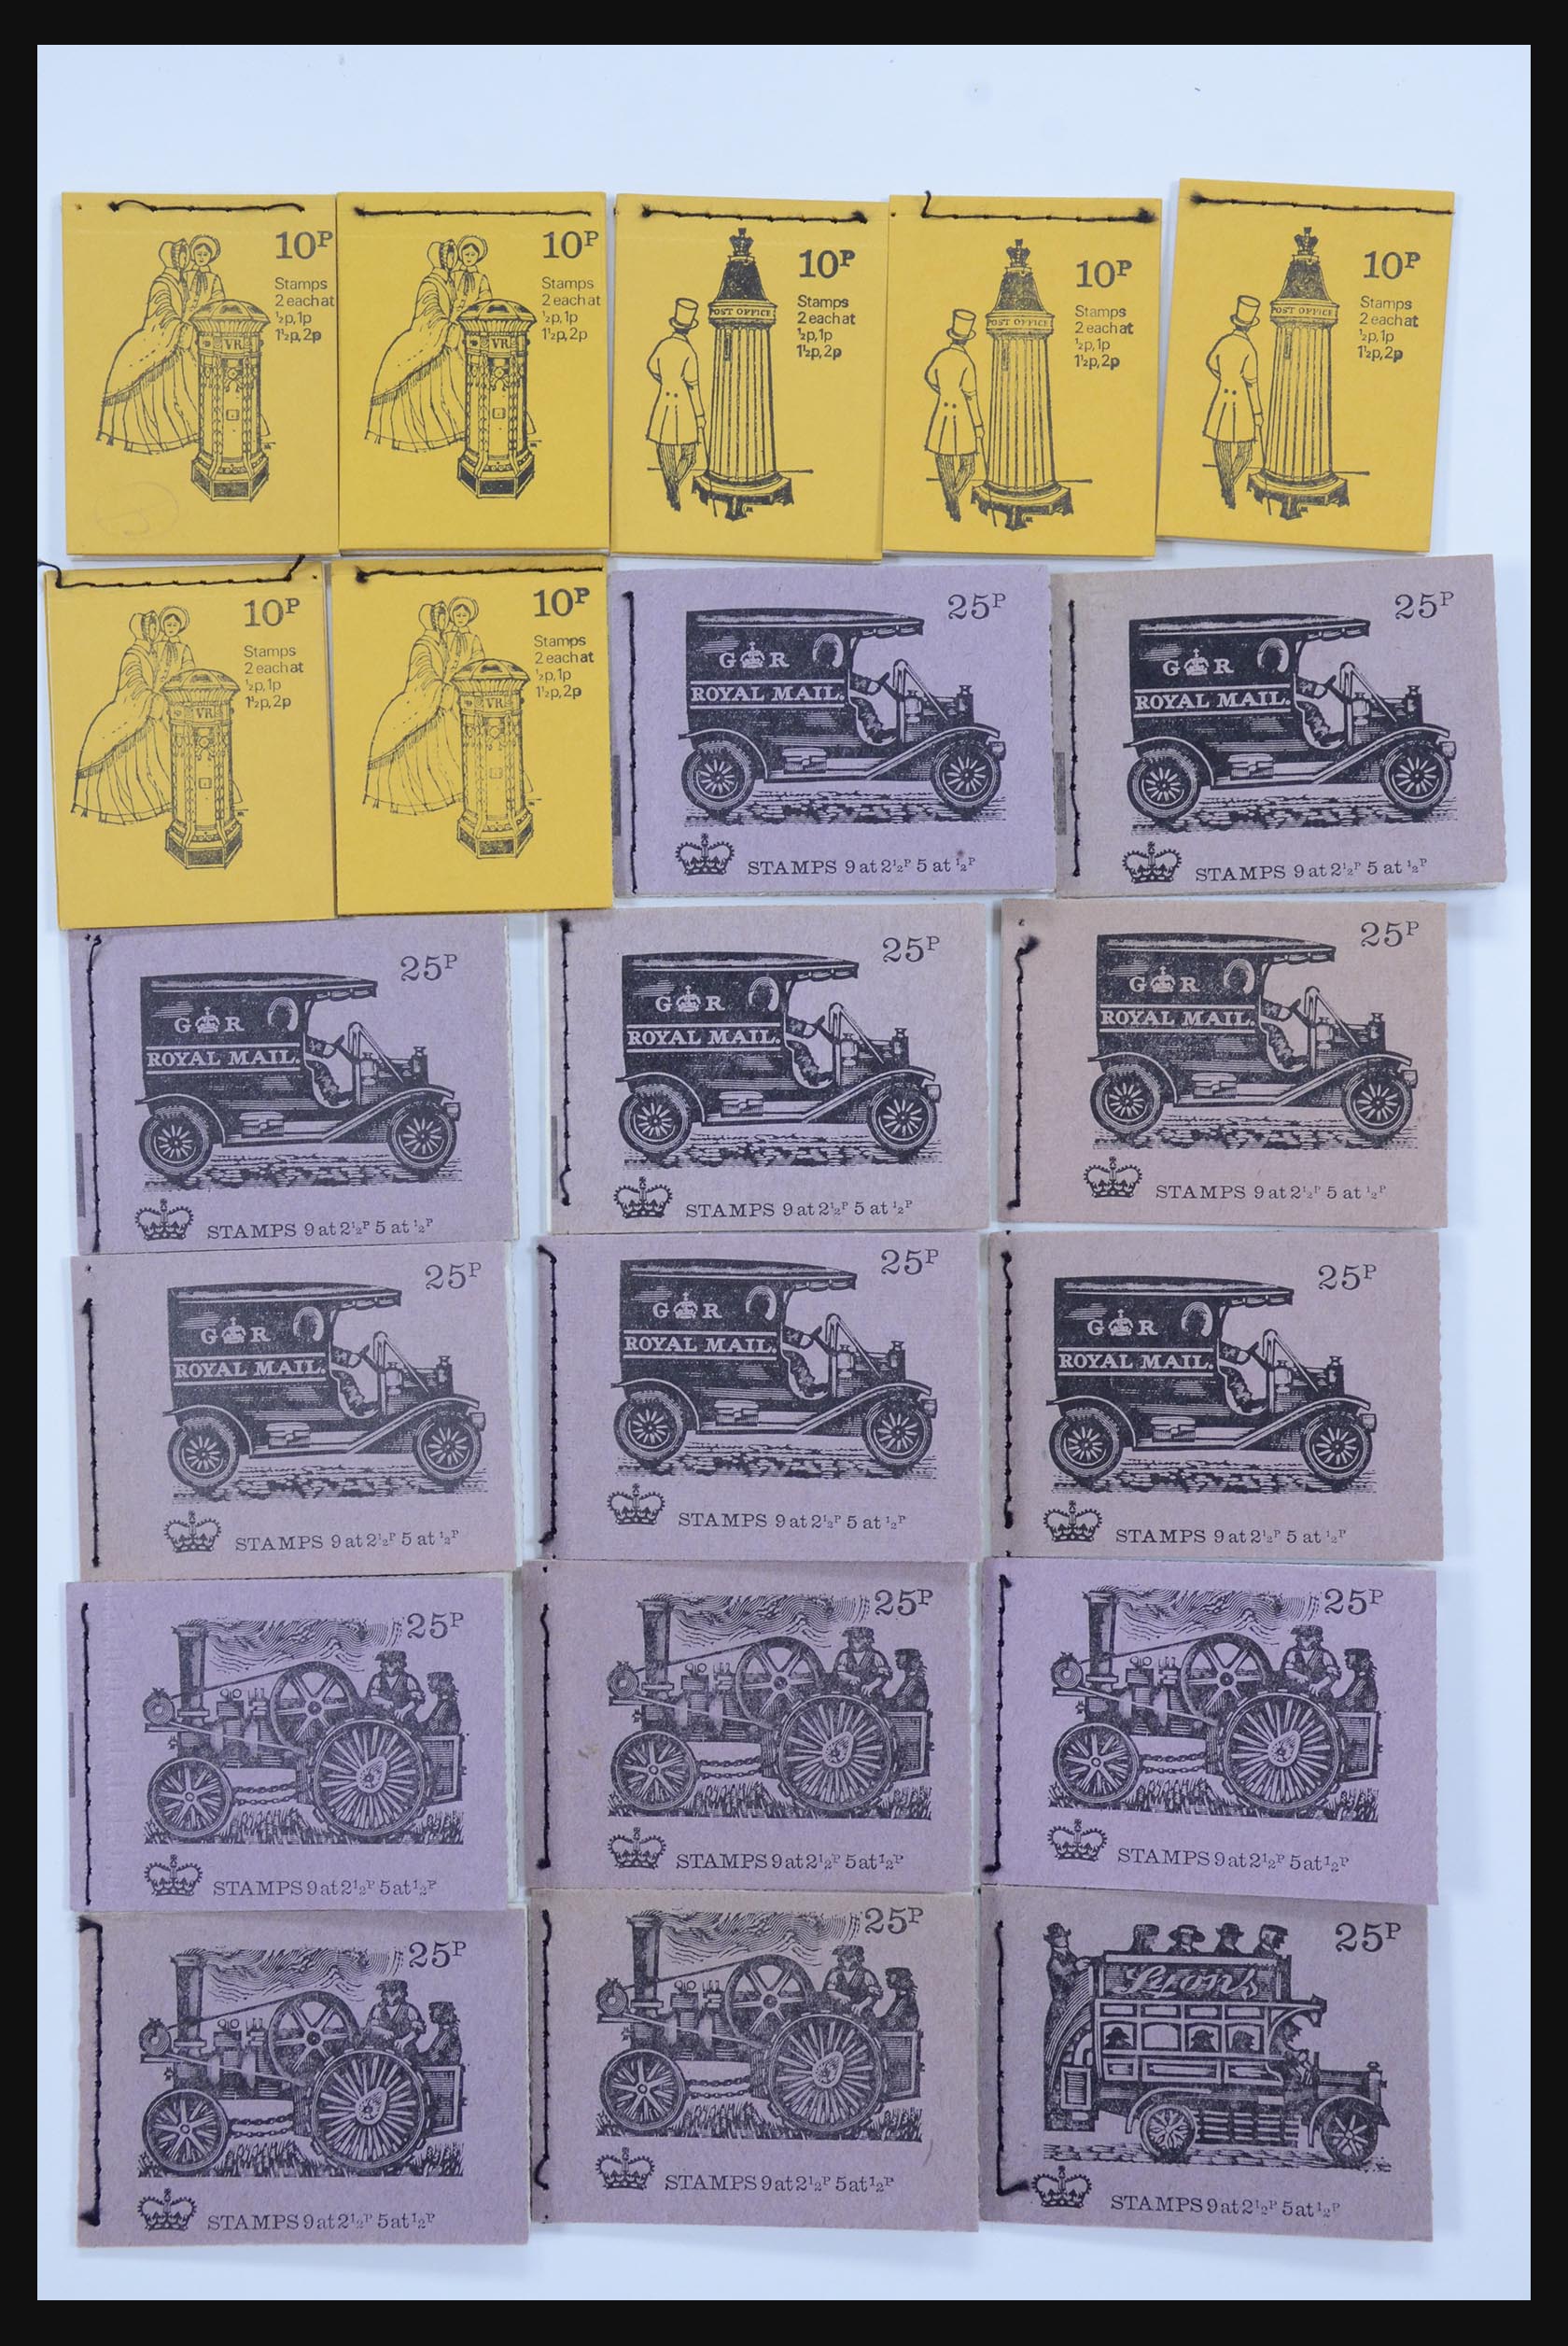 31961 009 - 31961 Great Britain stampbooklets 1971-1999.